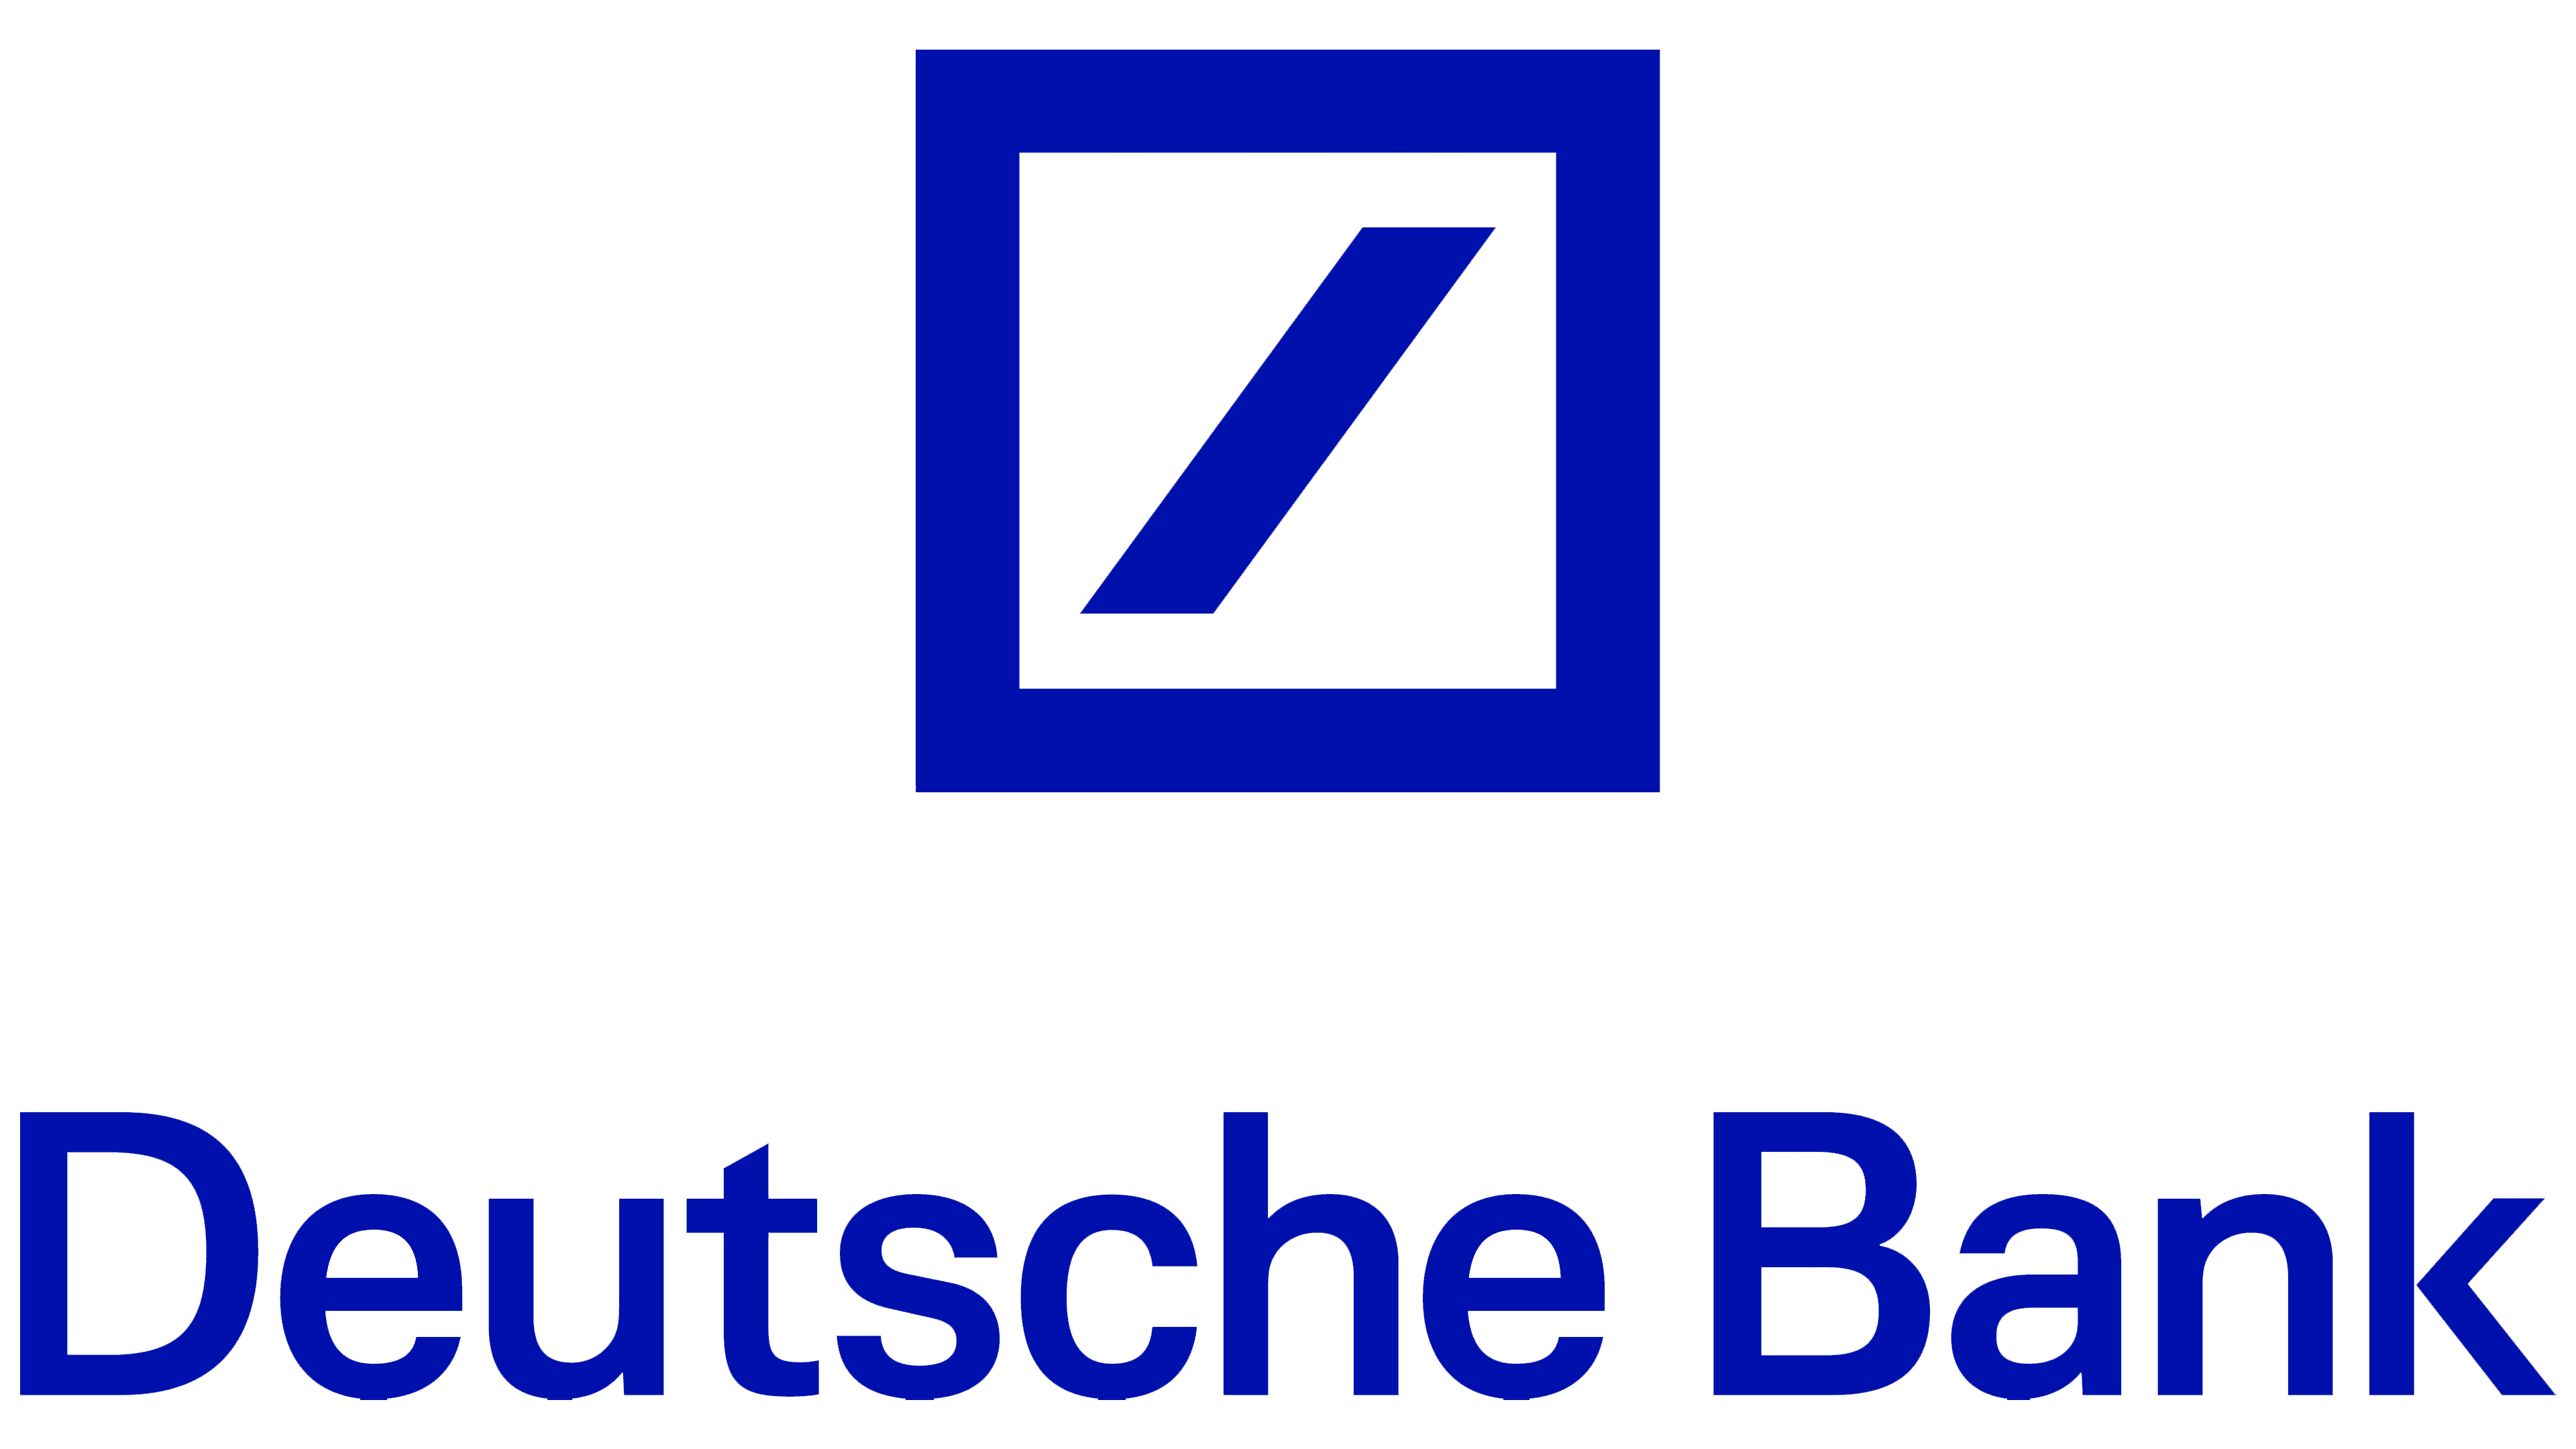 Deutsche-Bank-Emblem